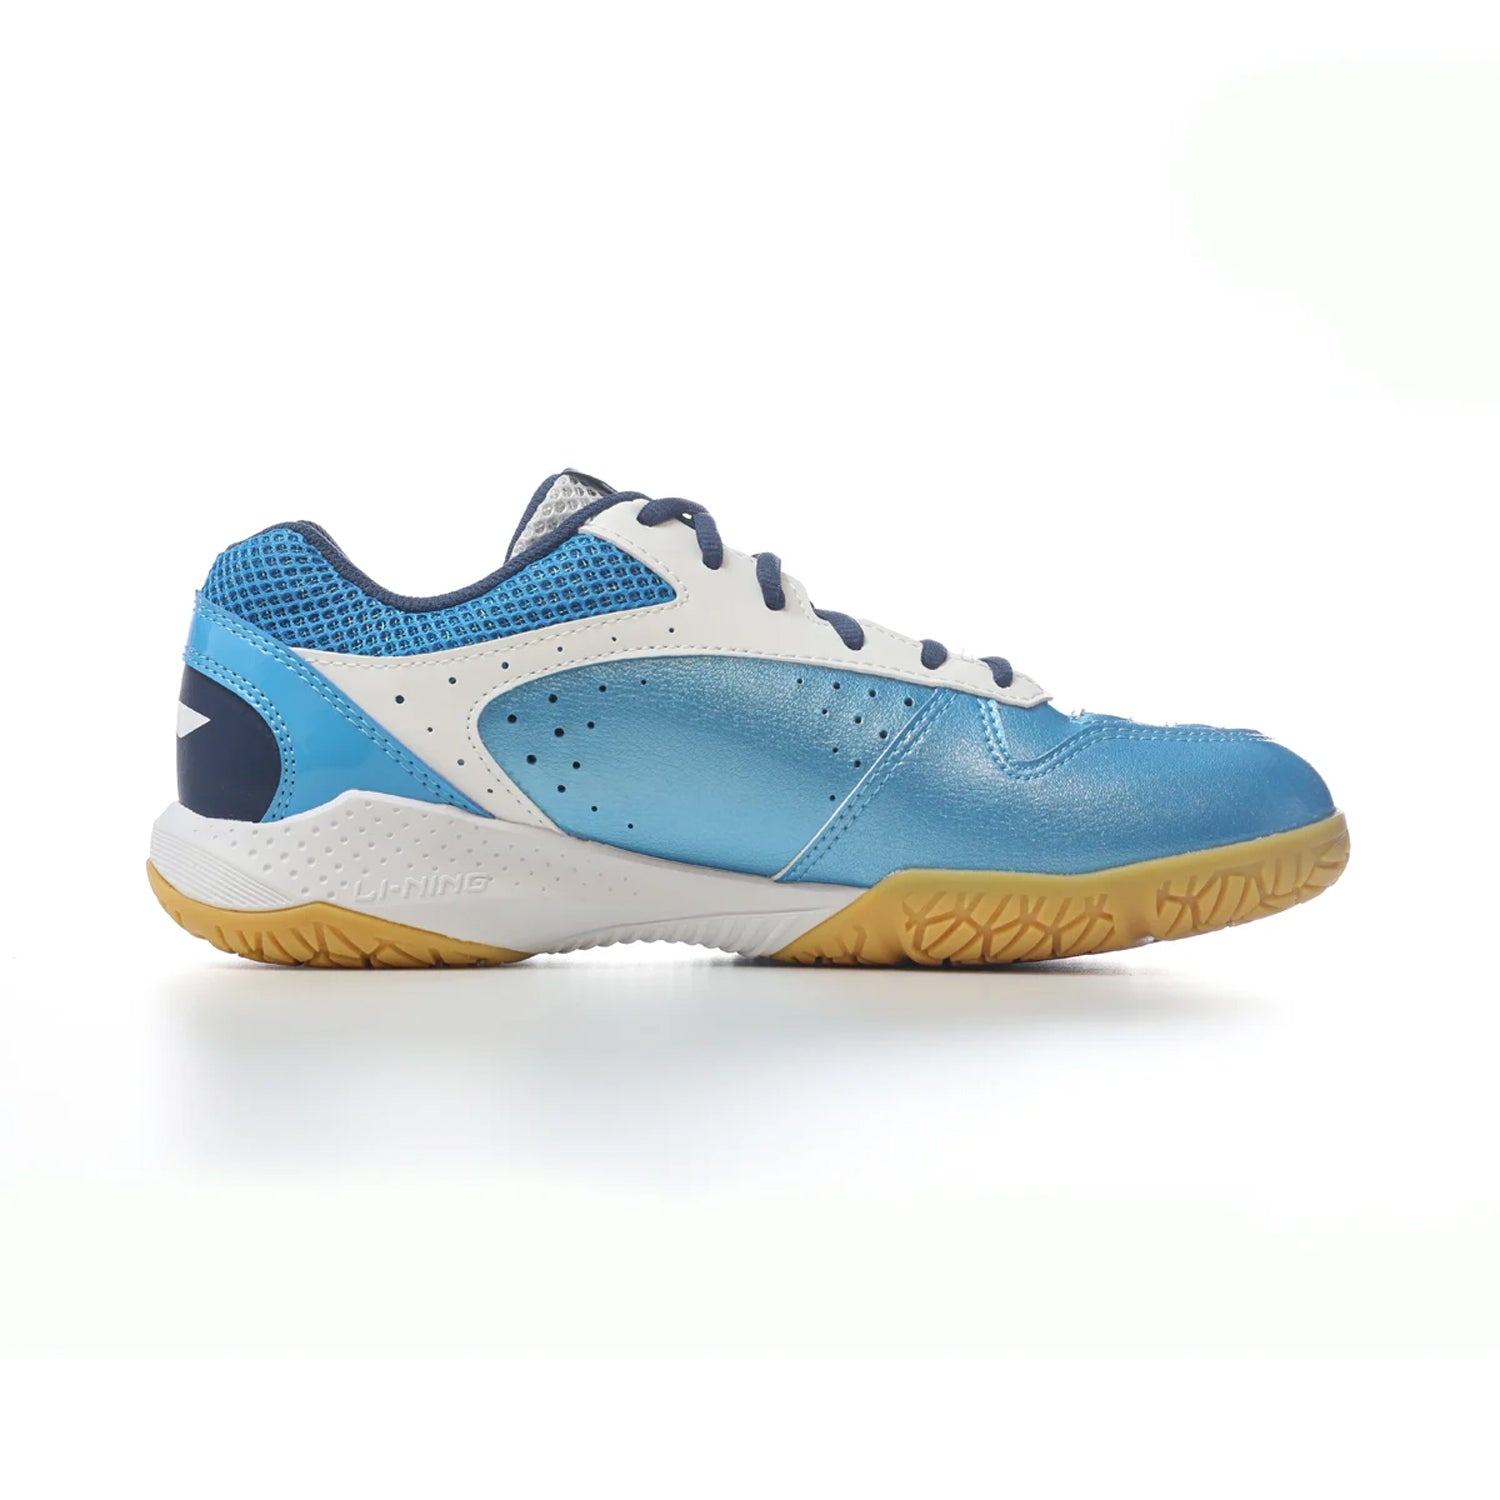 Li-Ning AYTS024 Lei Ting Train Badminton Training Shoes, Interstellar Blue/Standard White - Best Price online Prokicksports.com